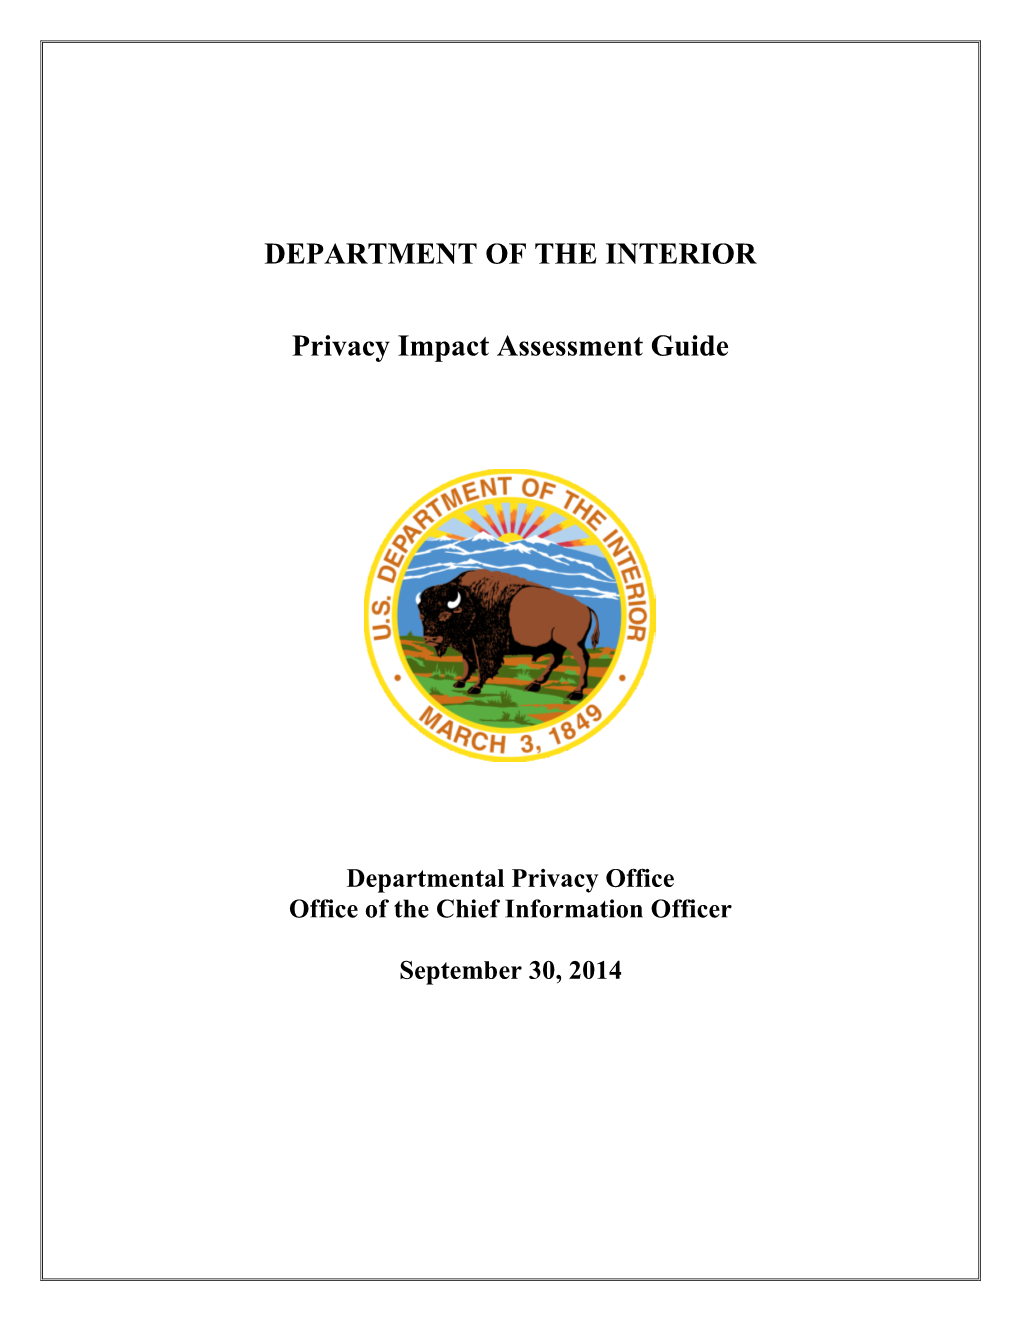 DOI Privacy Impact Assessment Guide